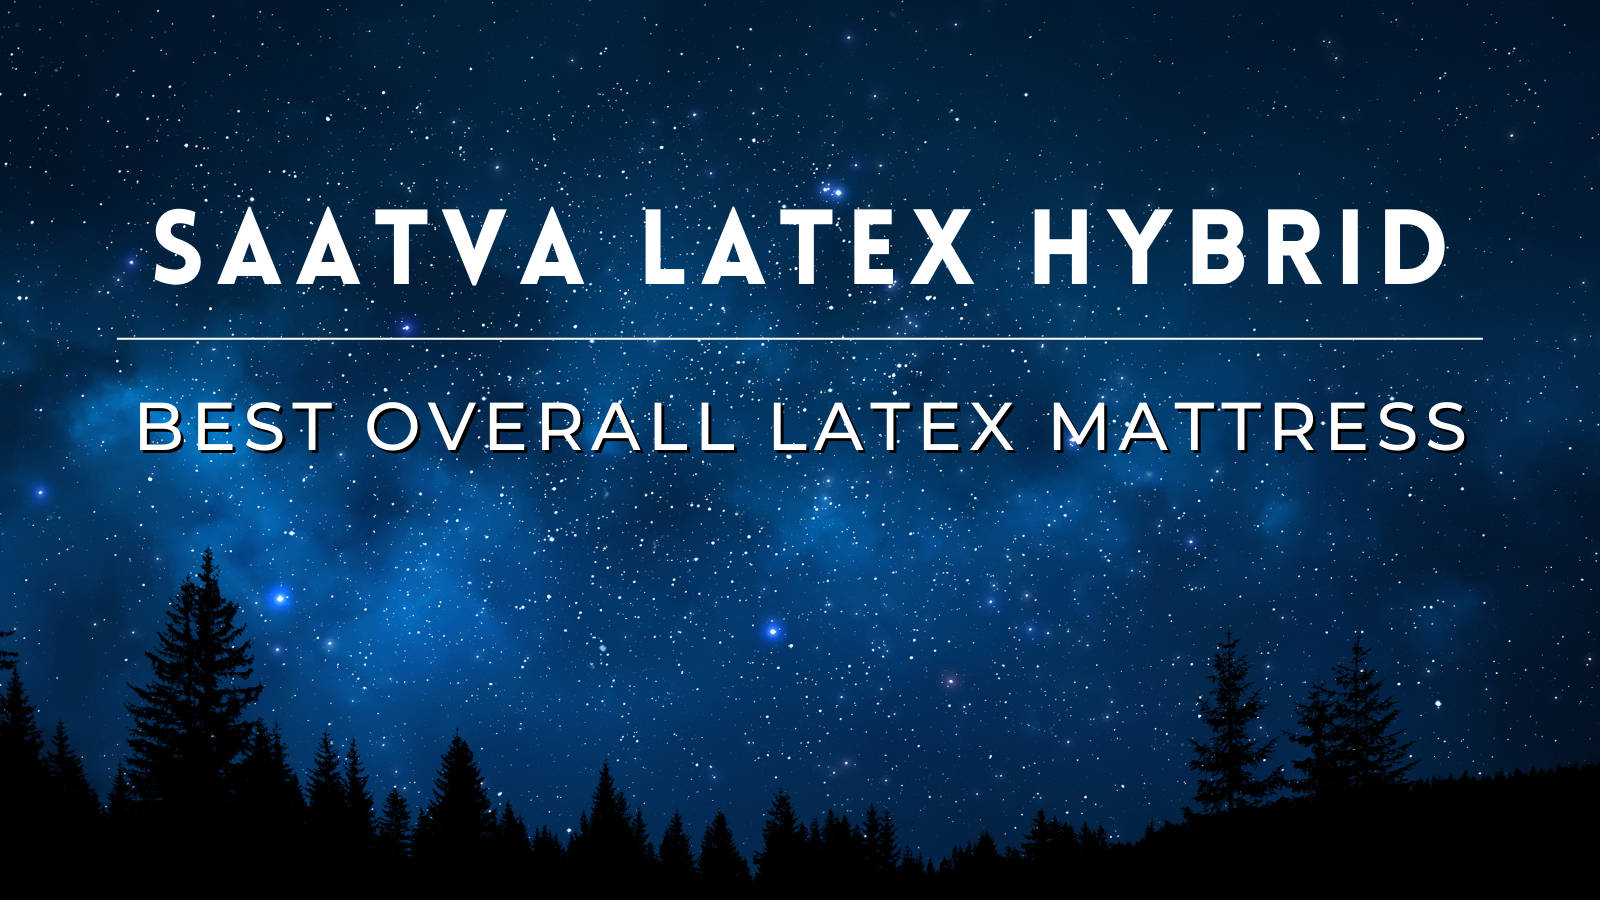 Saatva latex hybrid mattress independent review